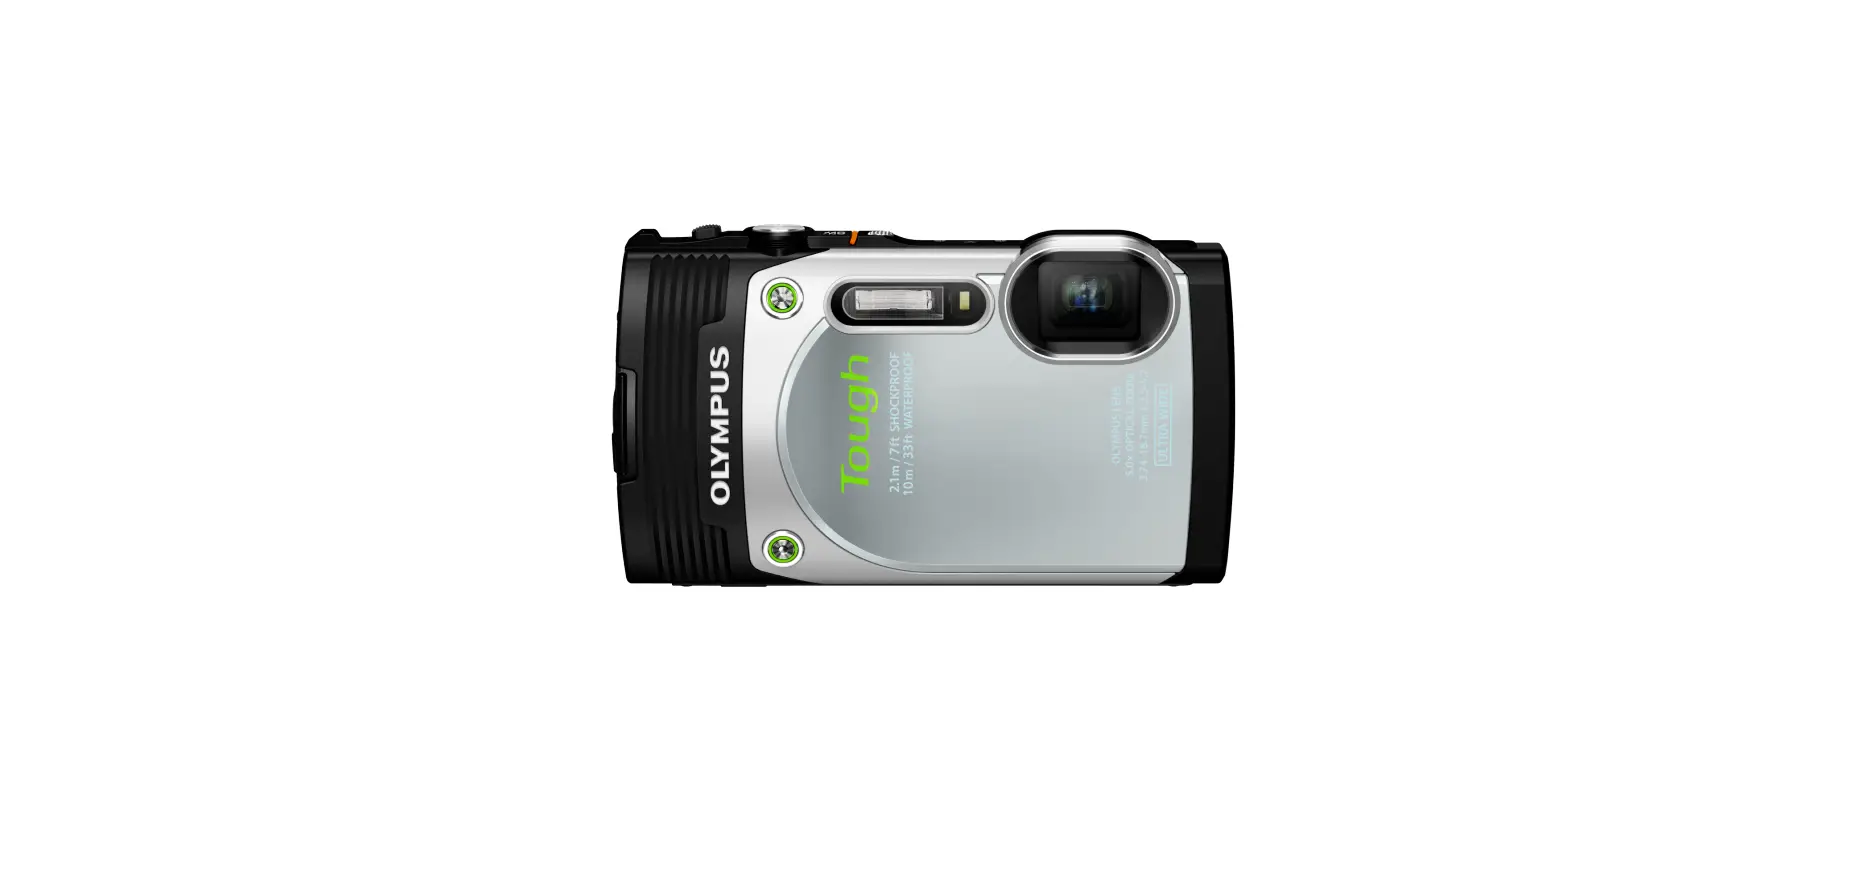 TG-850 Silver Digital Camera